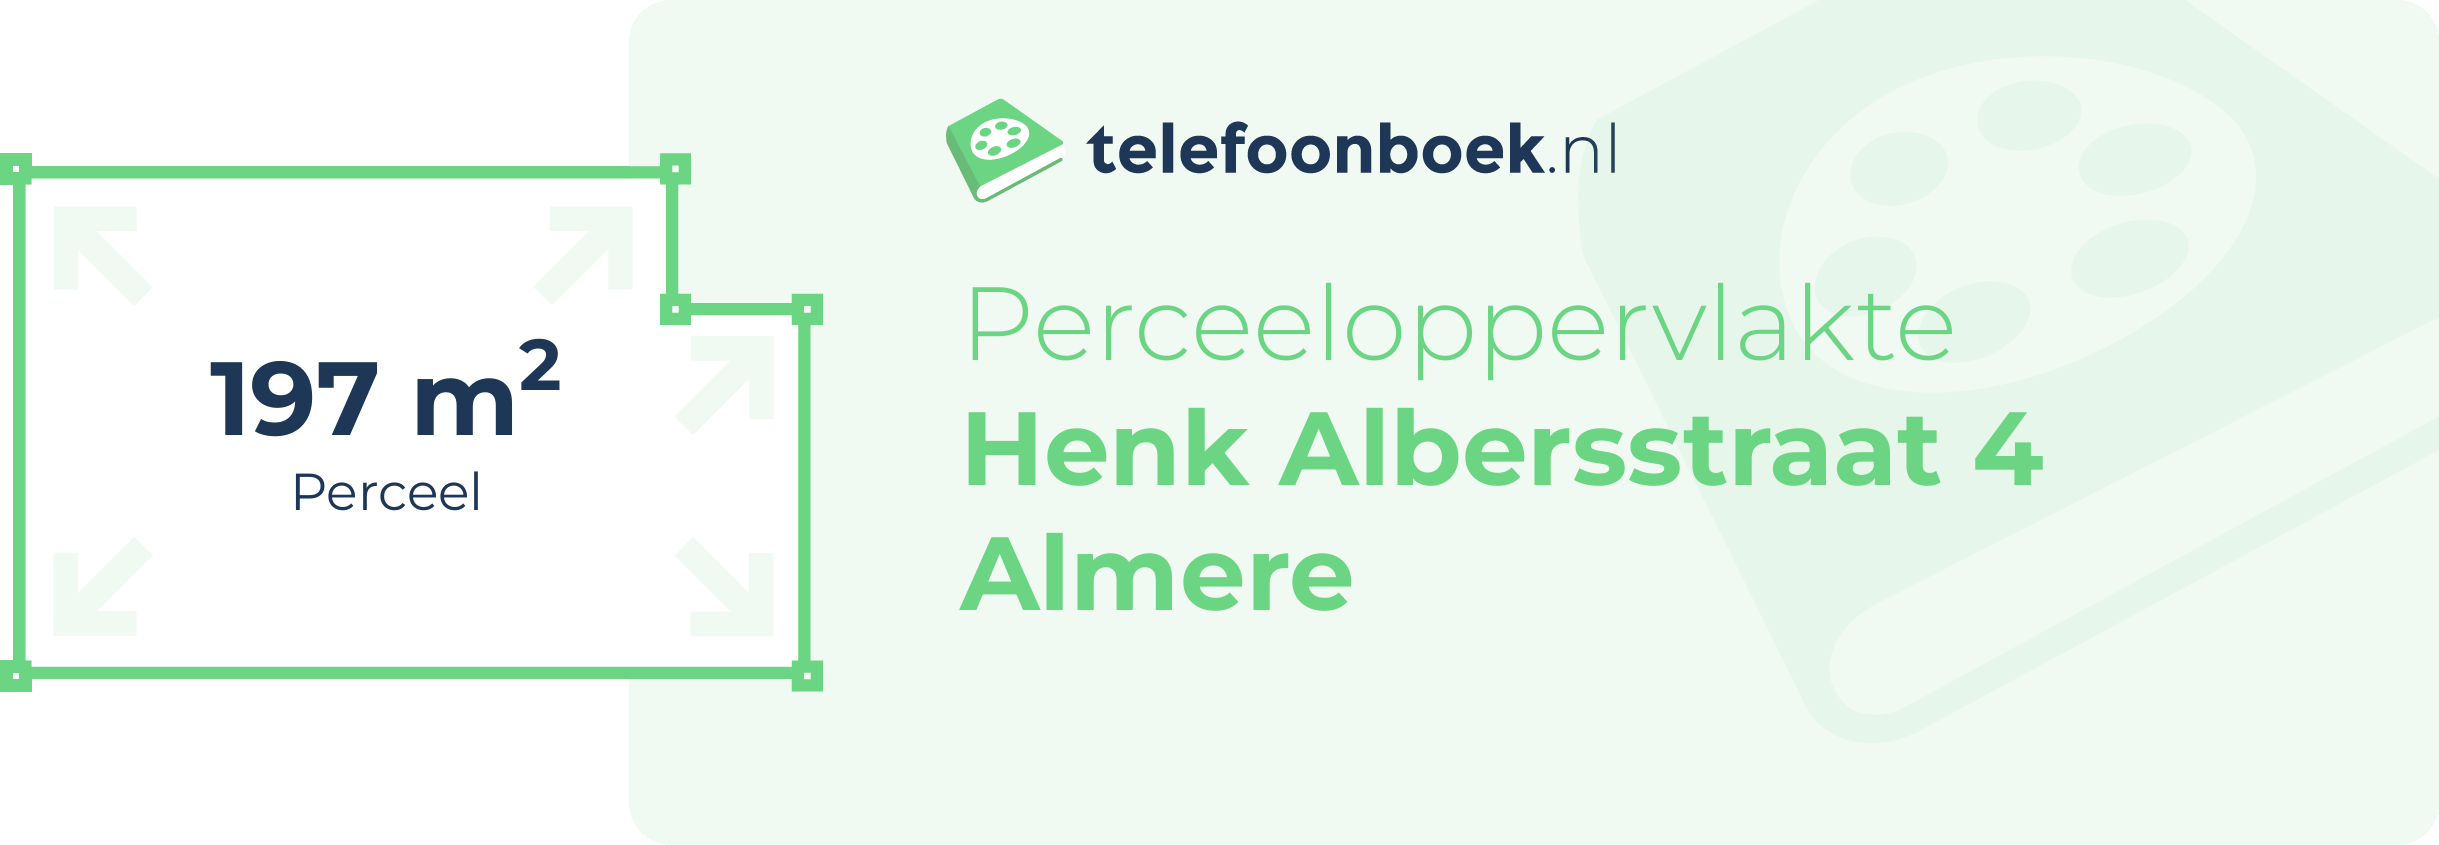 Perceeloppervlakte Henk Albersstraat 4 Almere